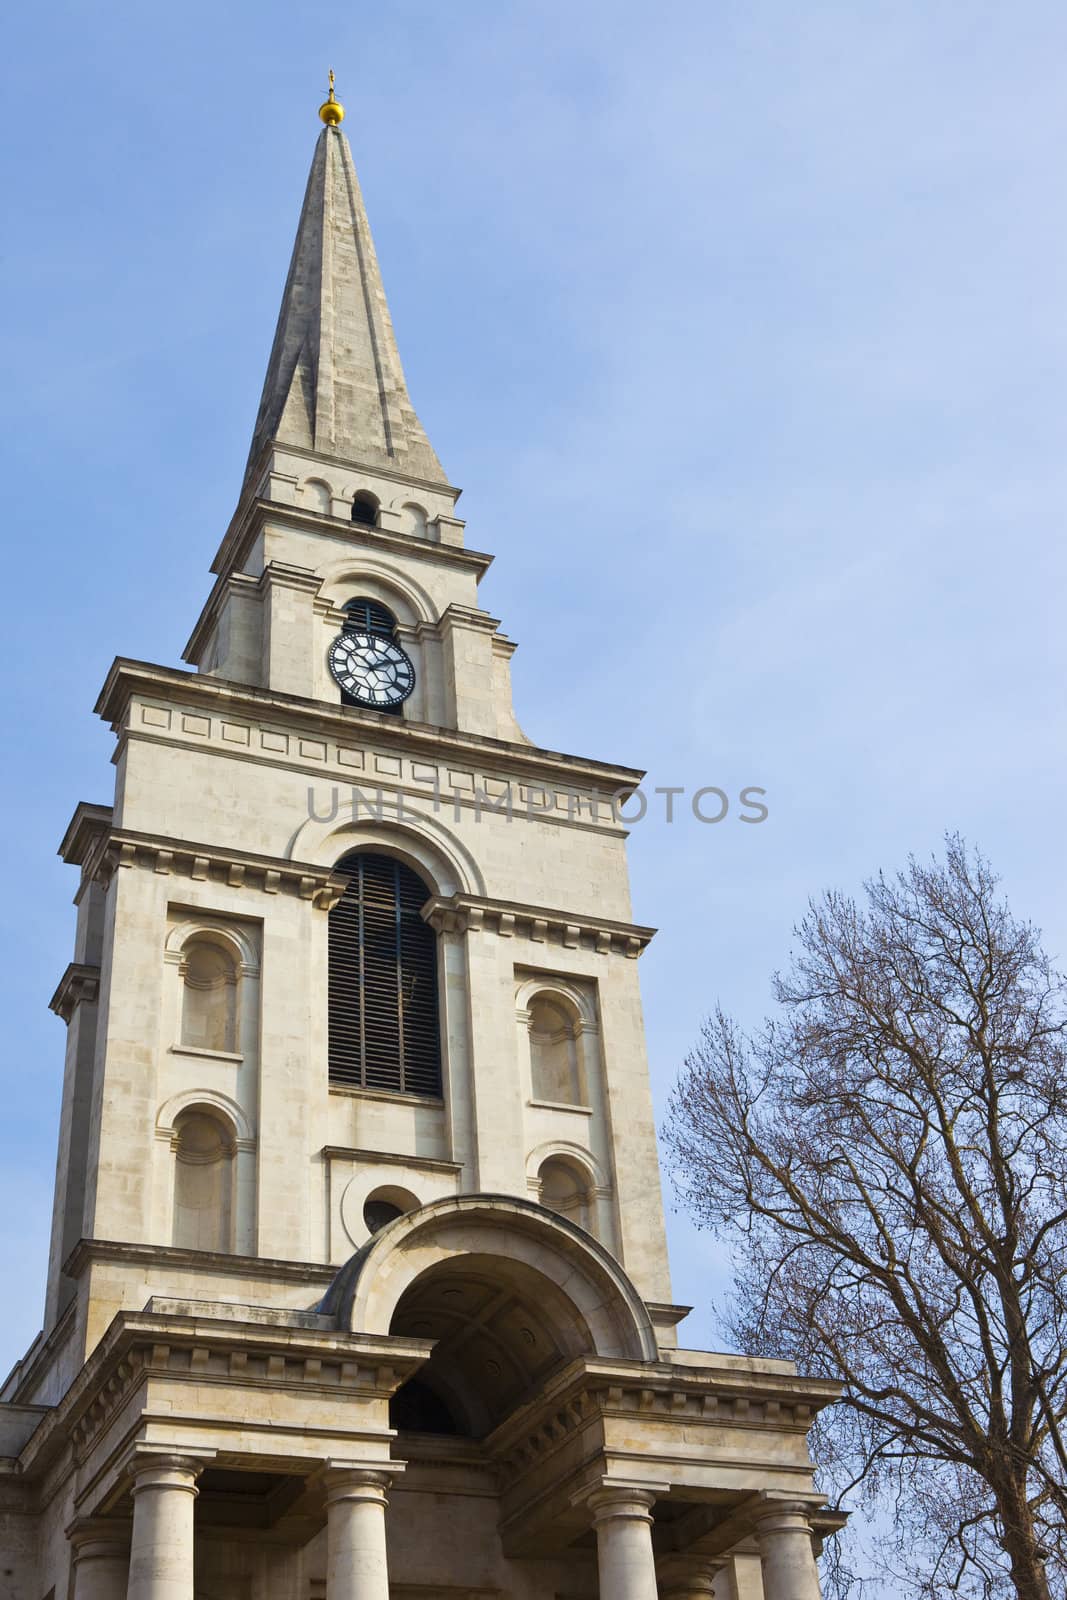 Christ Church Spitalfields in London by chrisdorney